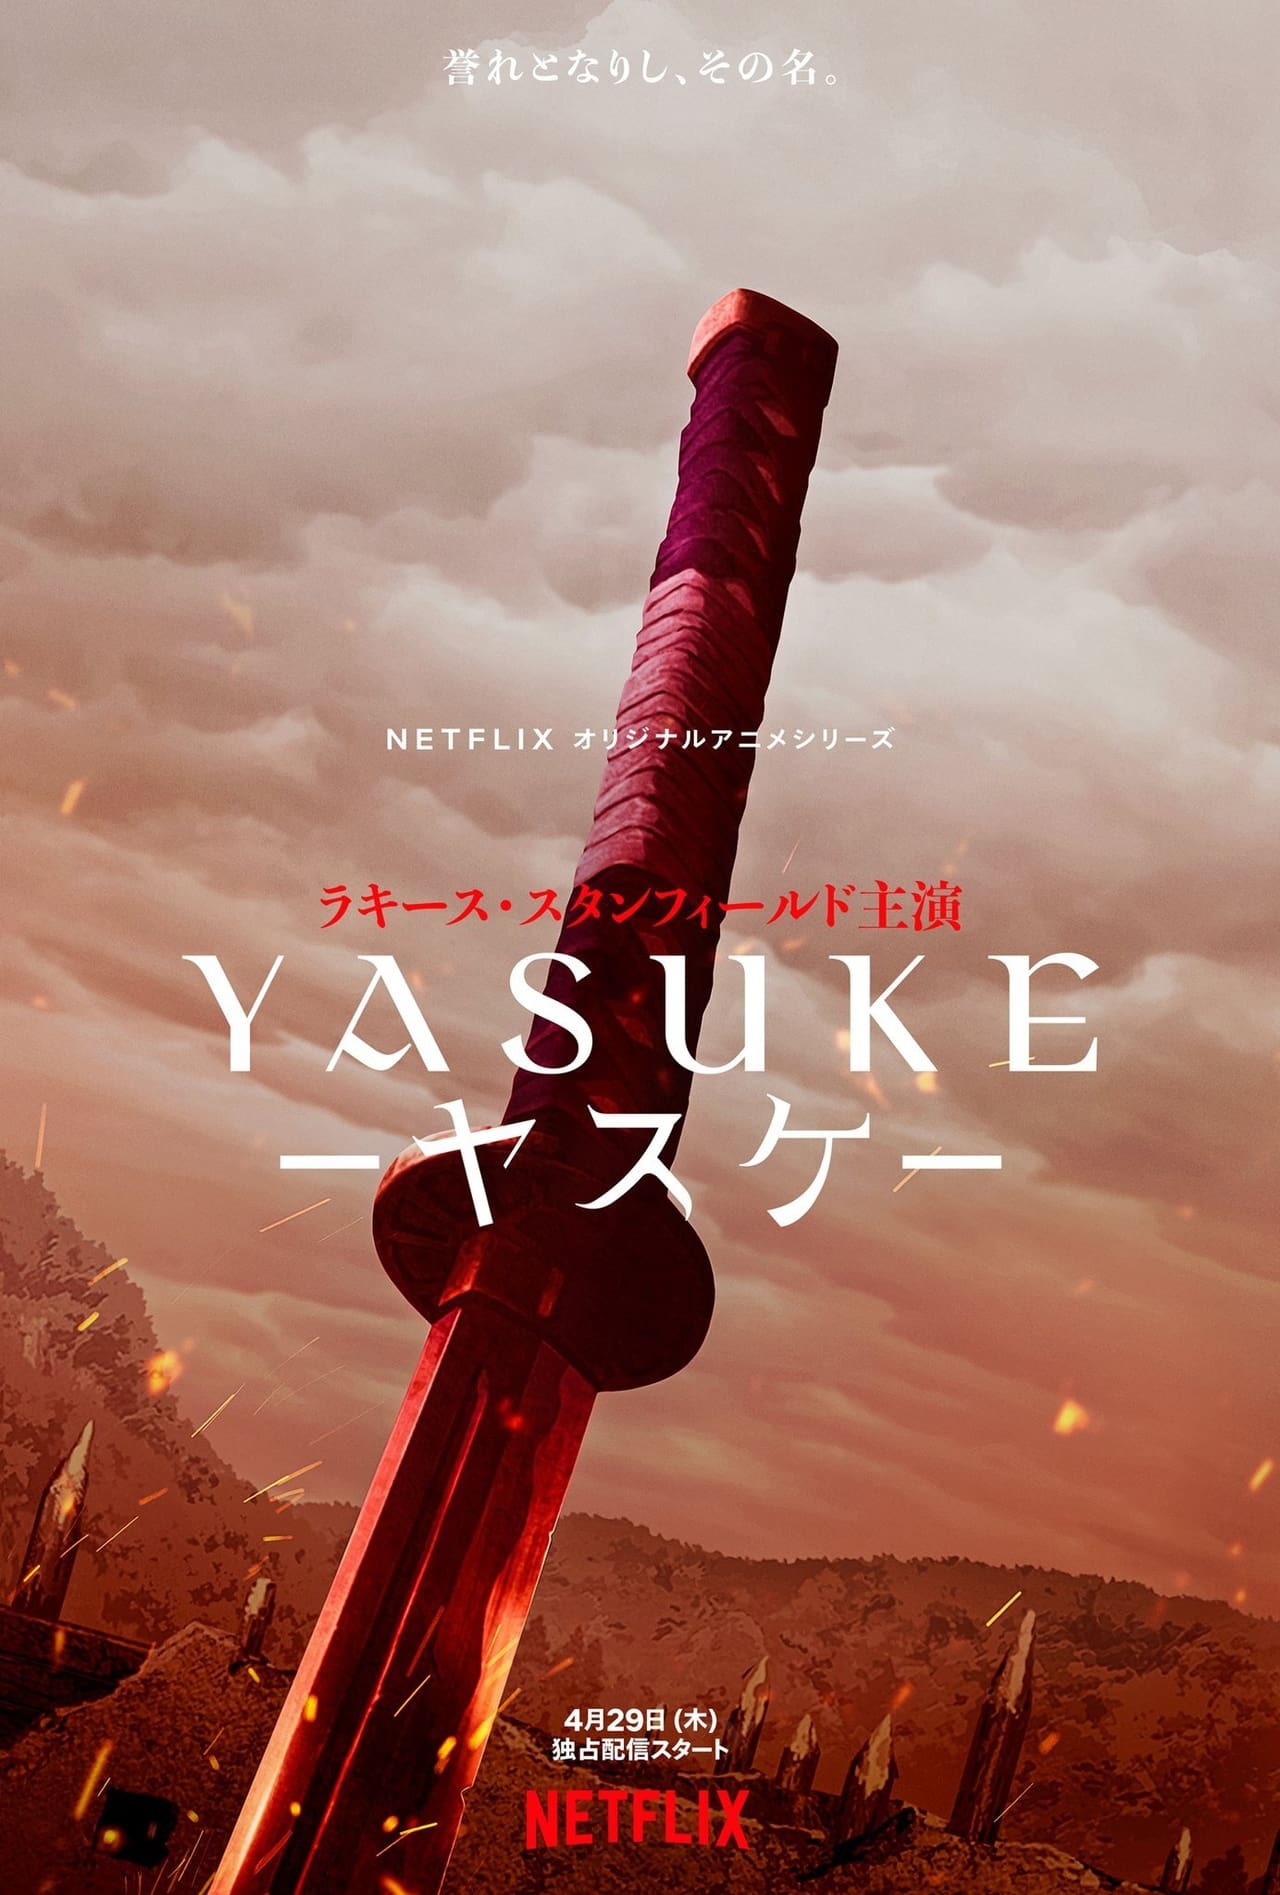 Yasuke (season 1)